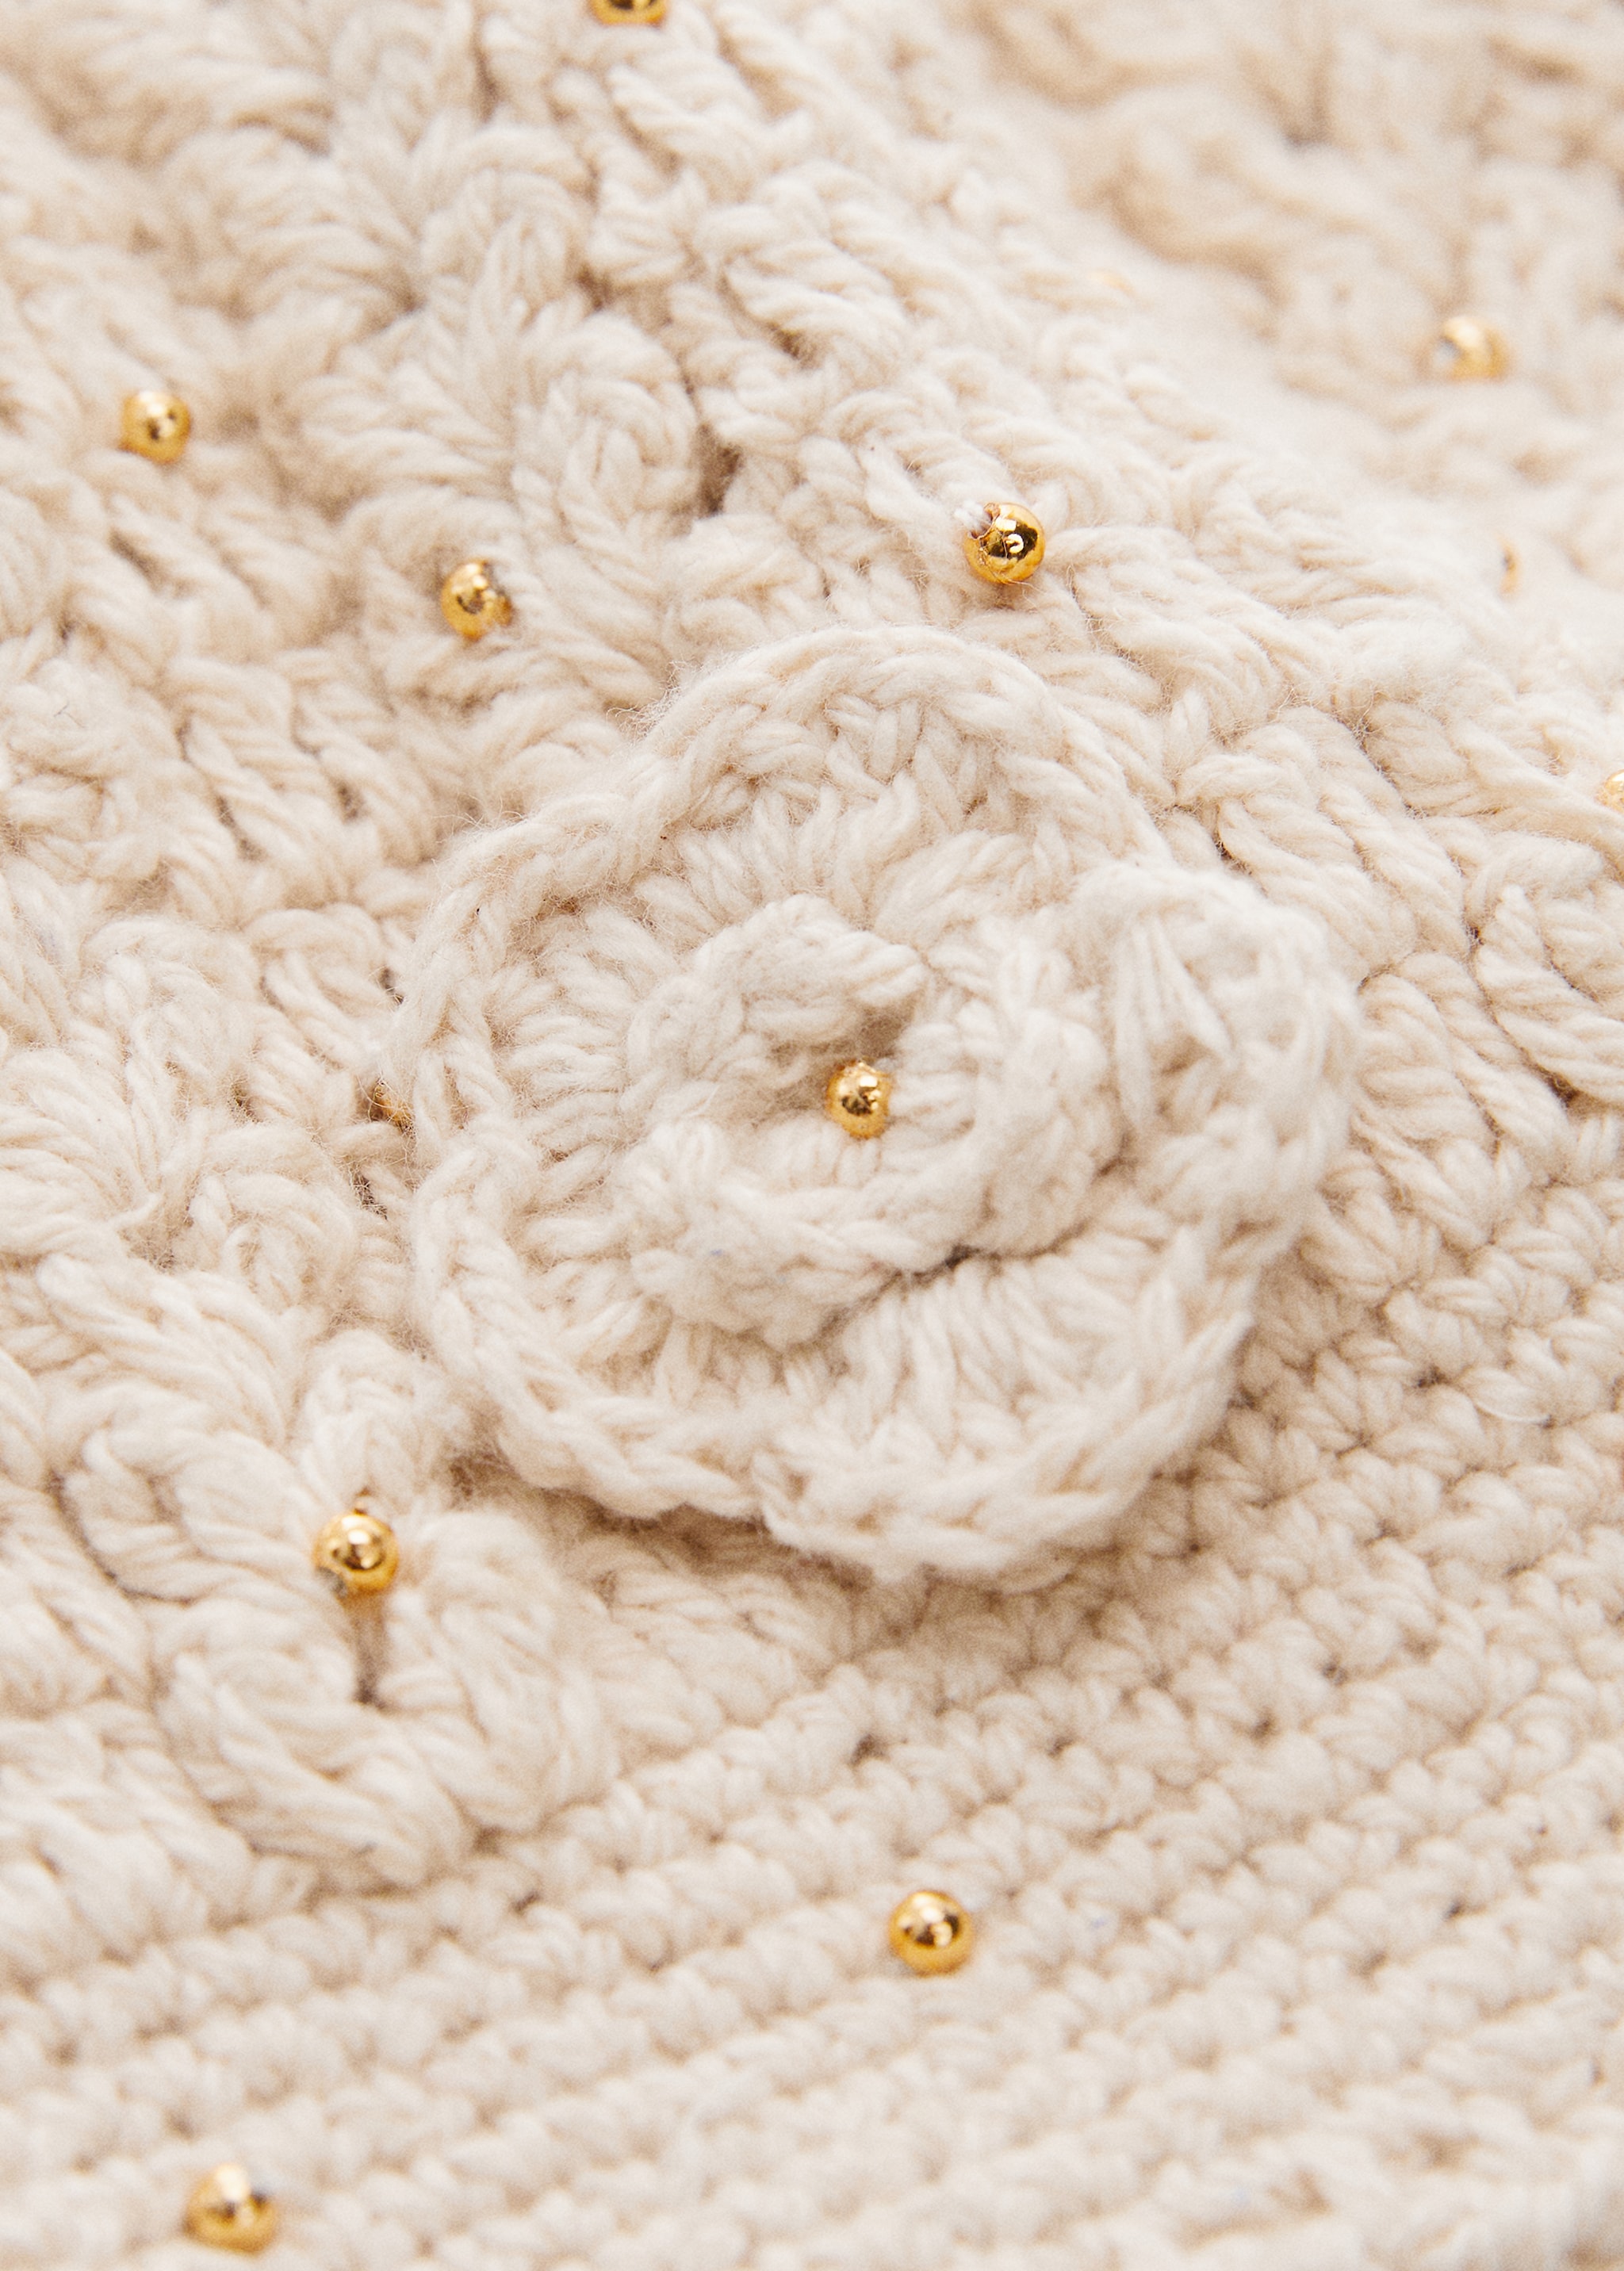 Floral crochet bag - Details of the article 3